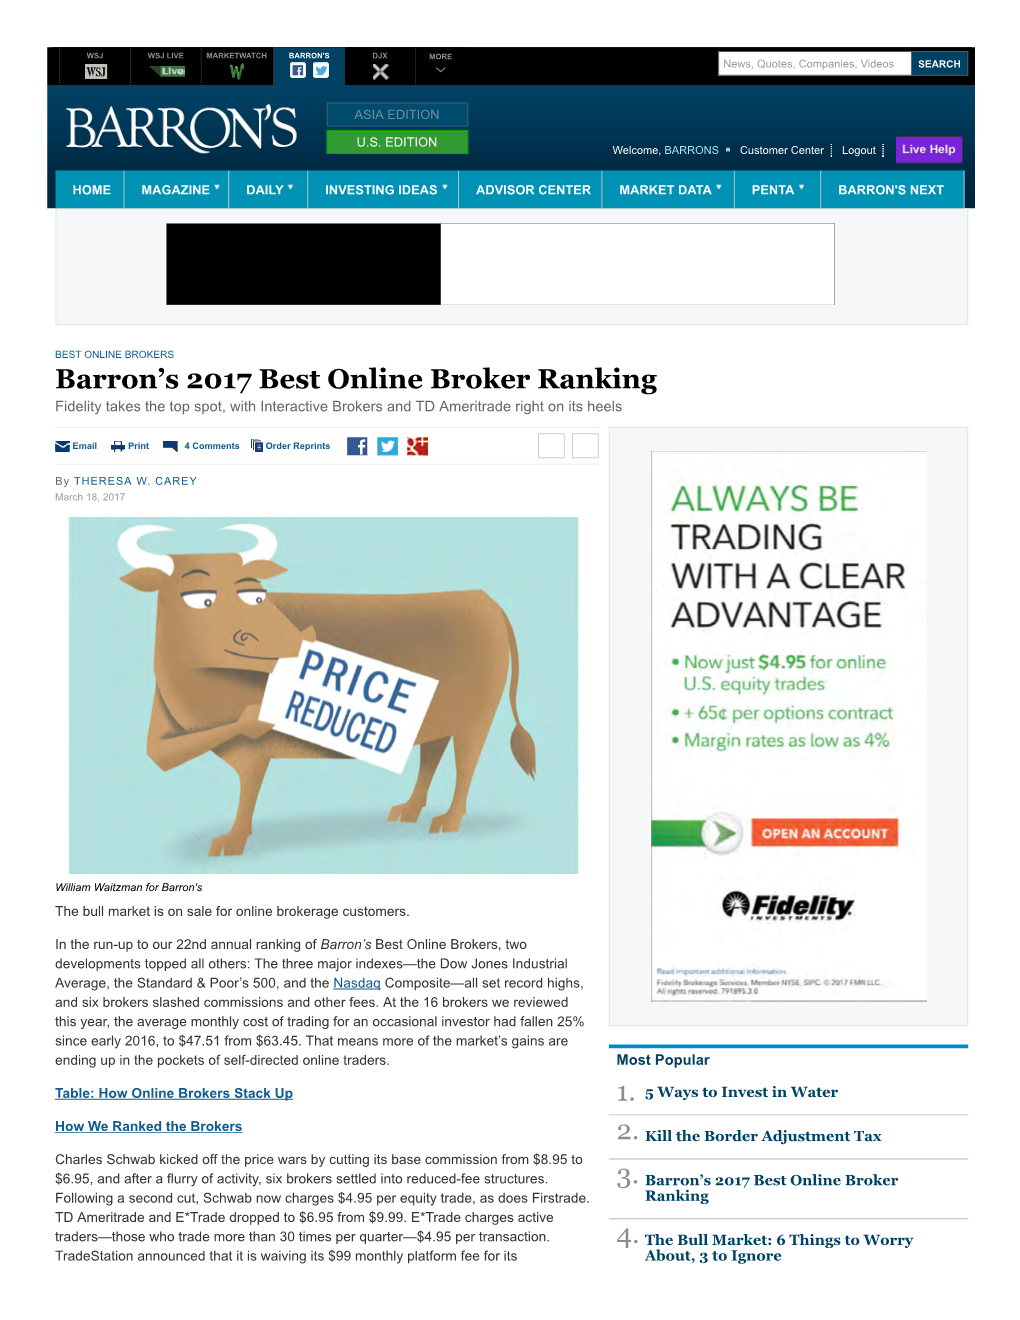 Barron's 2017 Best Online Broker Ranking 1. 2. 3. 4